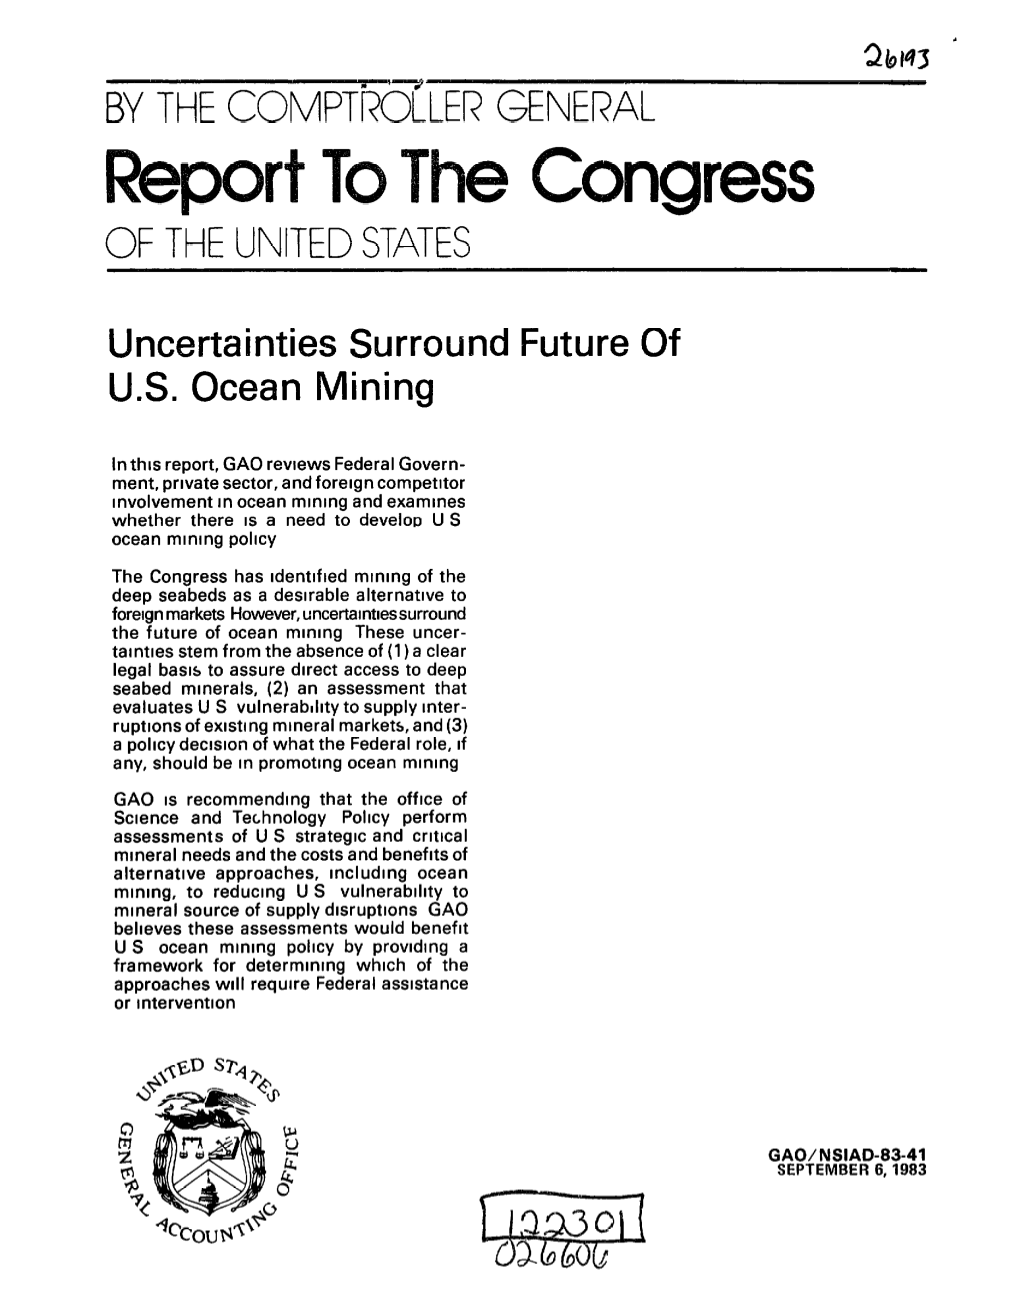 NSIAD-83-41 Uncertainties Surround Future of U.S. Ocean Mining